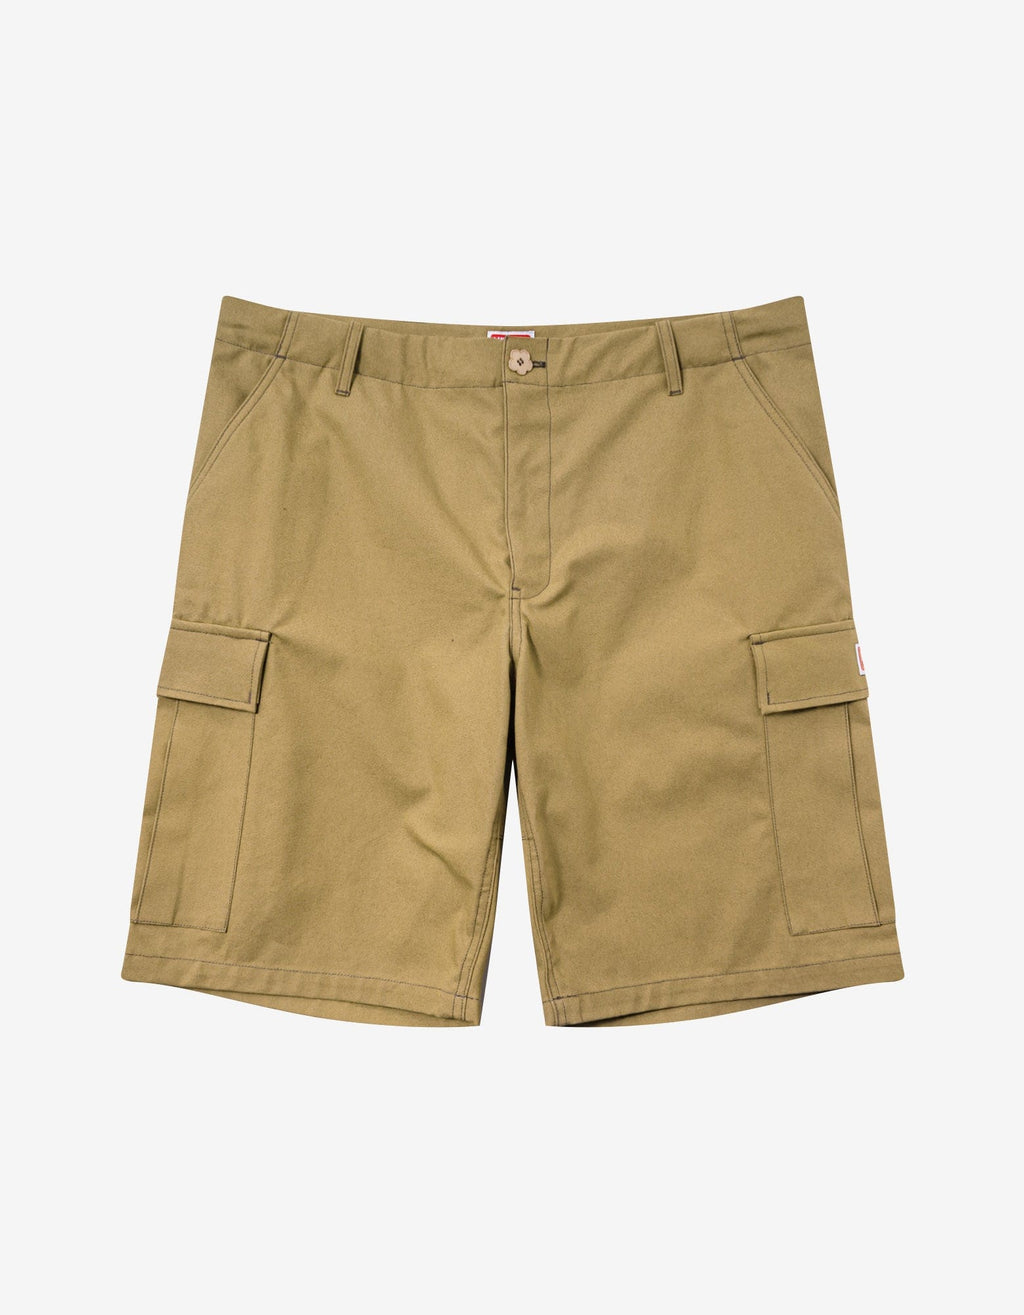 Kenzo Kenzo Beige Cargo Shorts